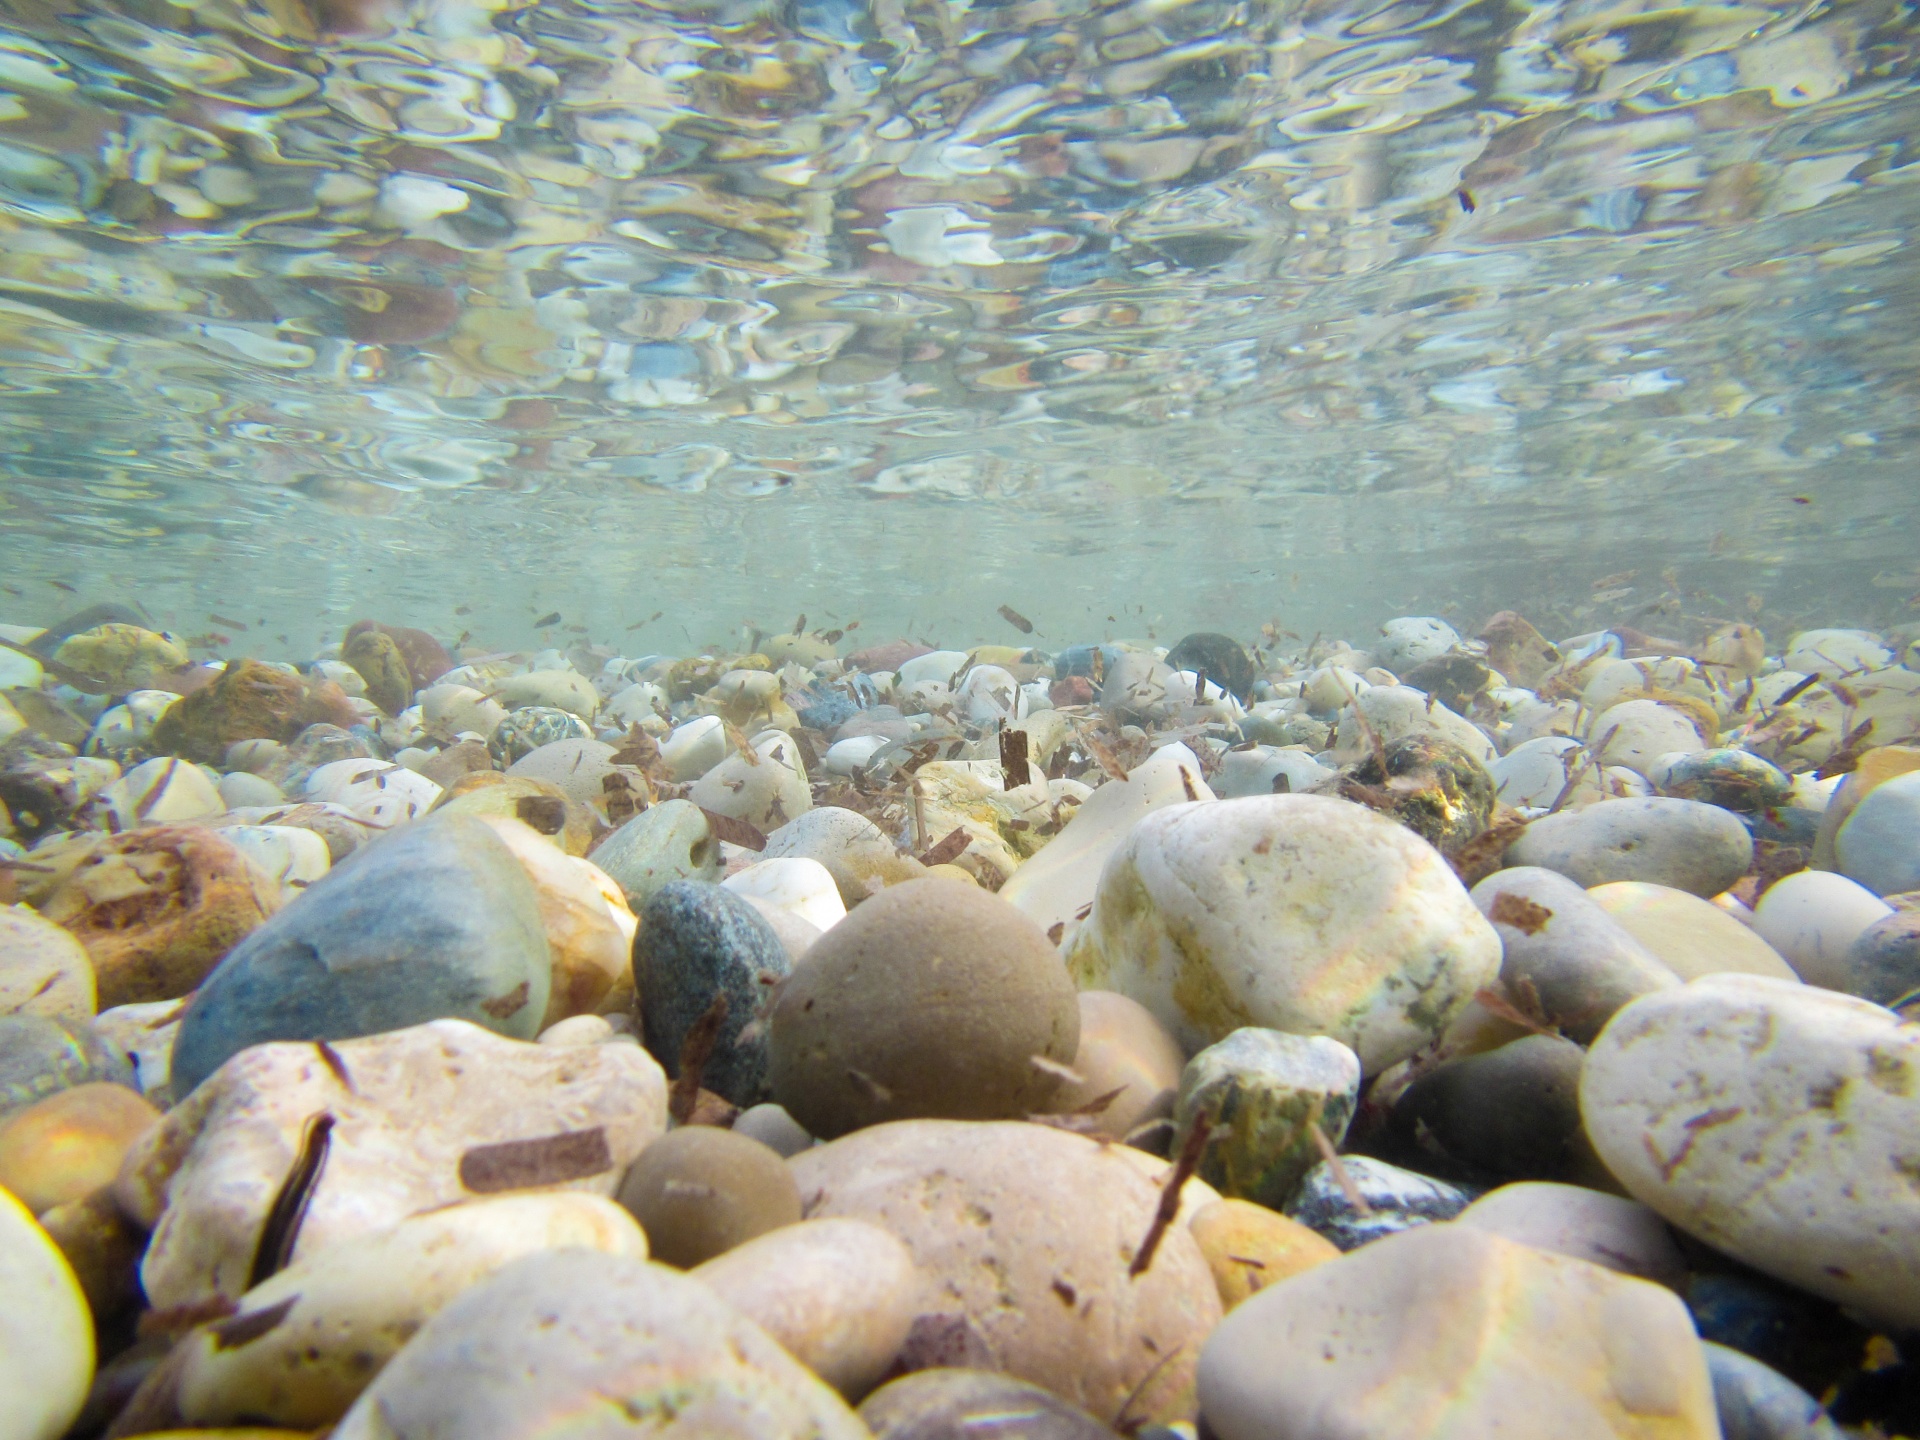 Pebbles Underwater